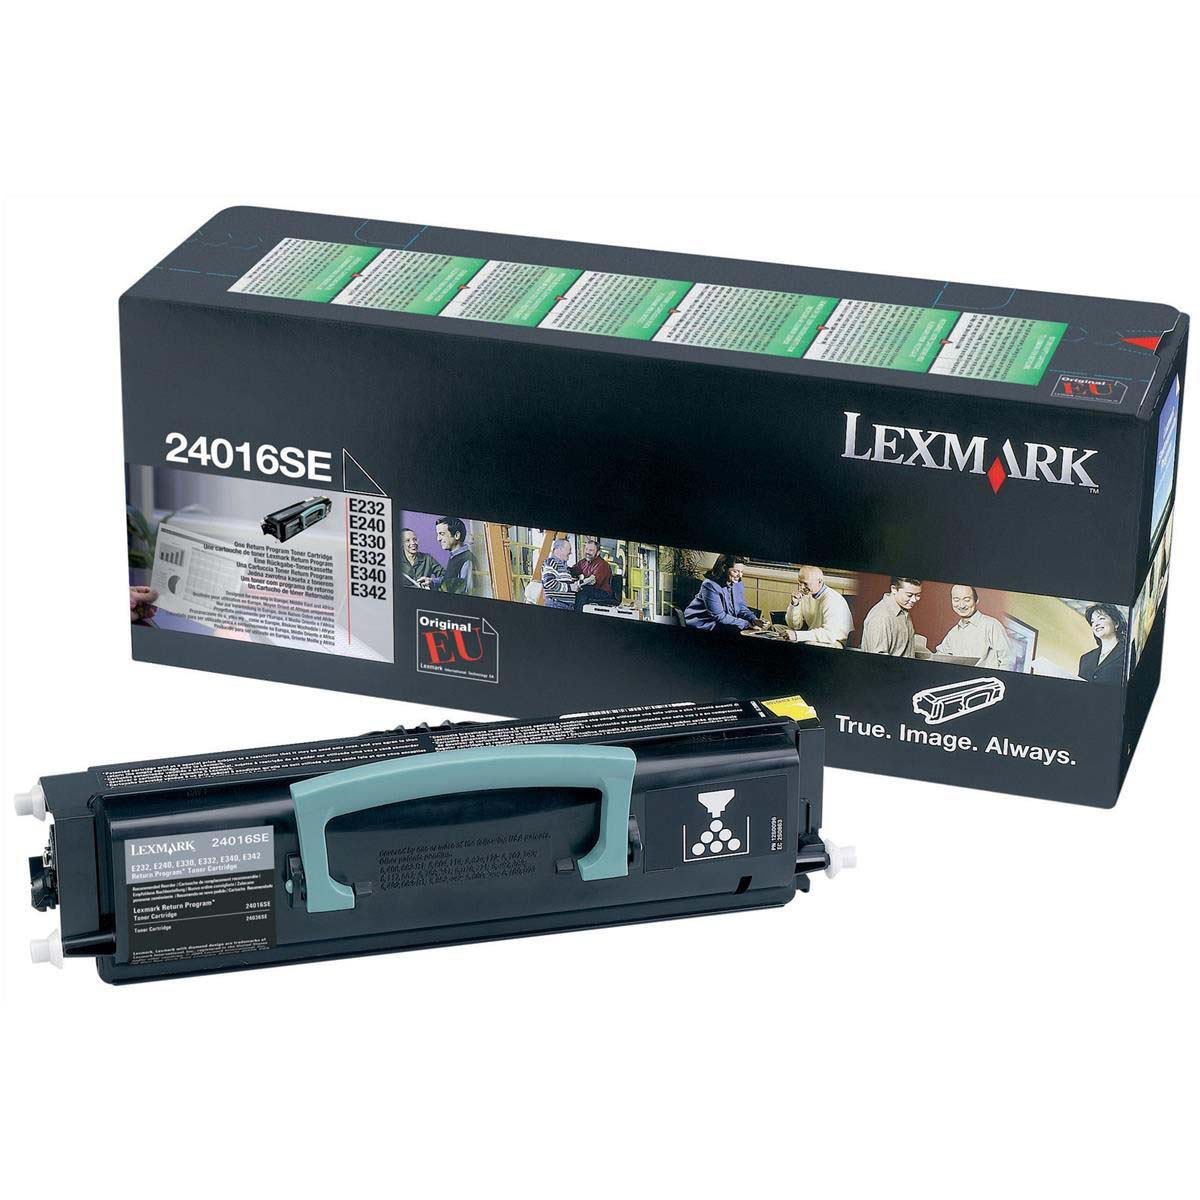 Original Lexmark 24016SE Black Toner Cartridge (24016SE)